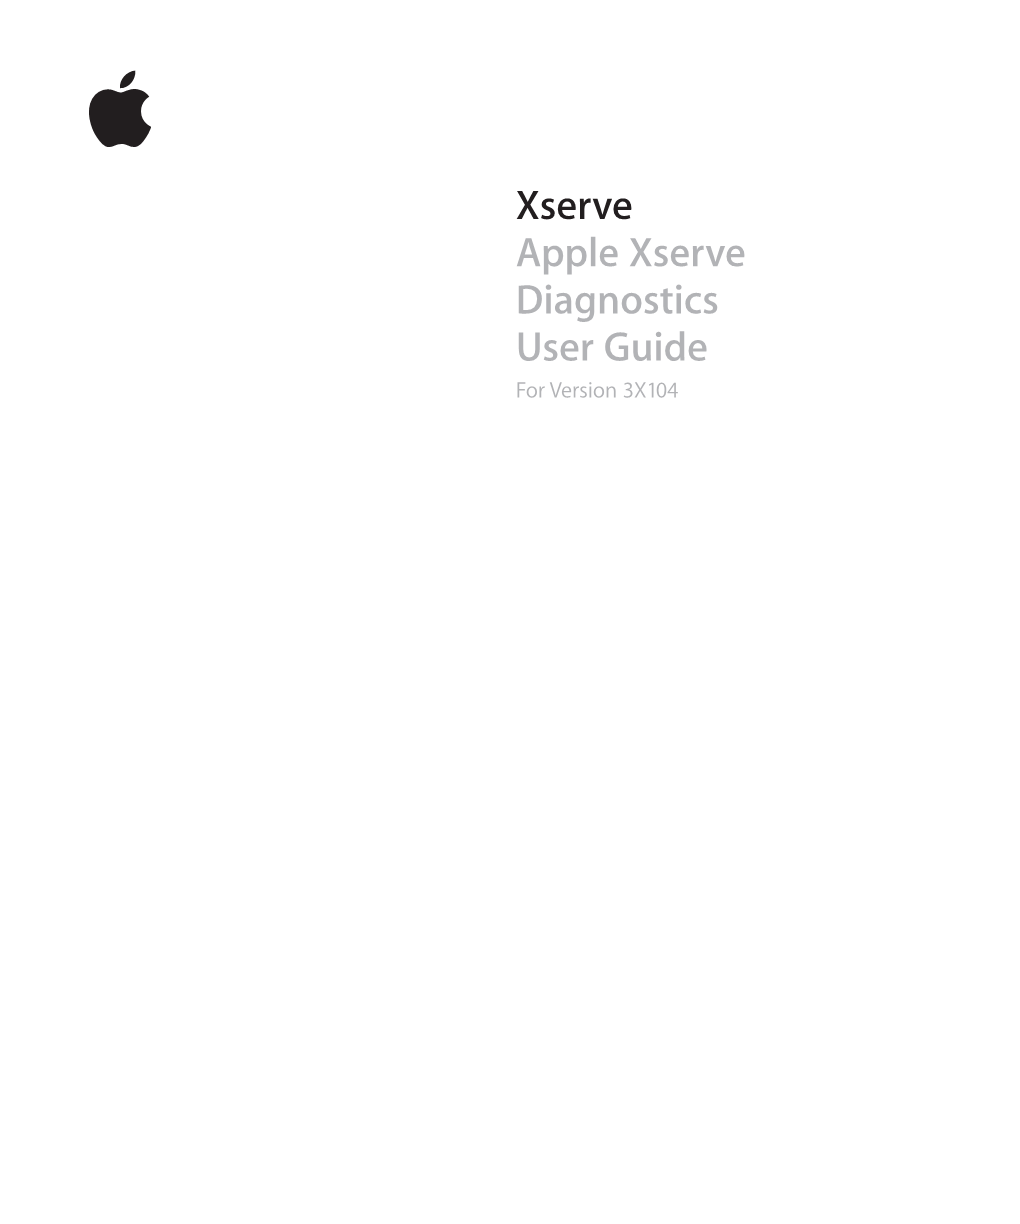 Apple Xserve Diagnostics User Guide Version 3X104